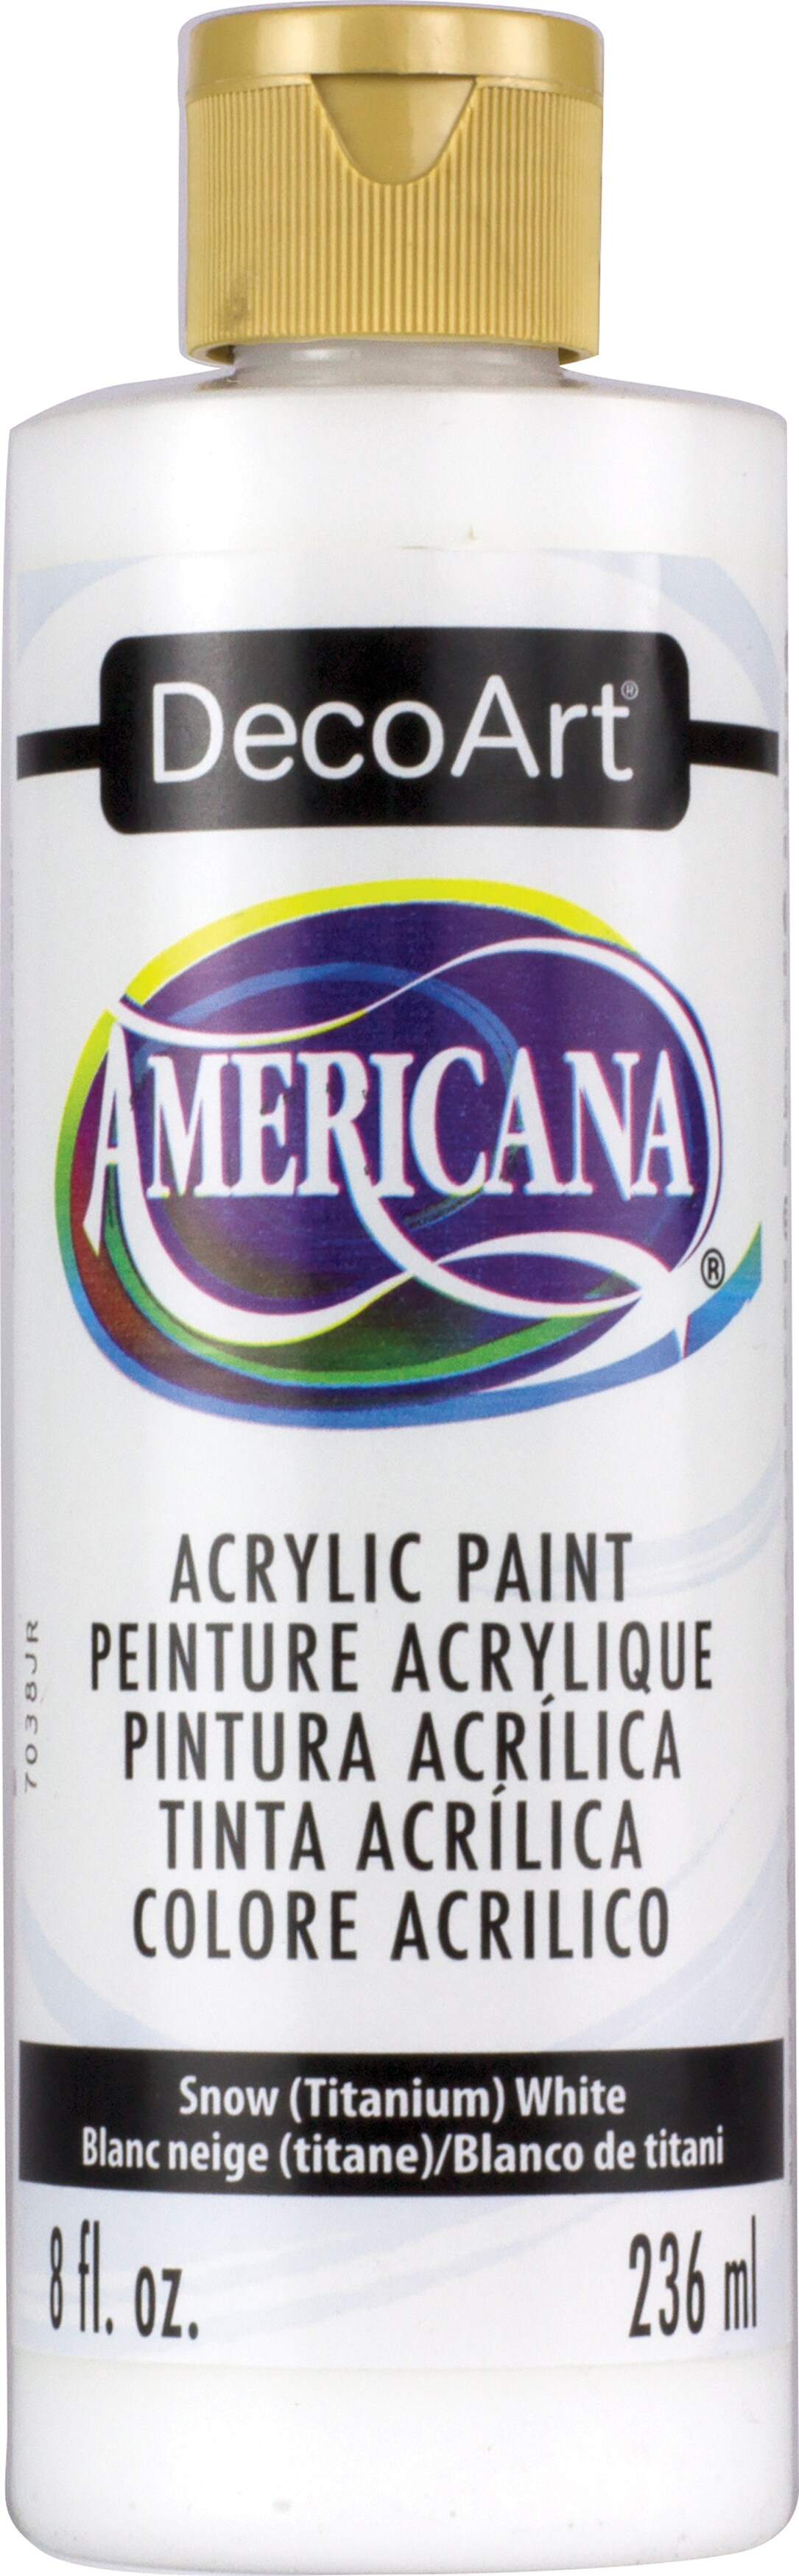 Americana Acrylic Paint 8oz Snow White